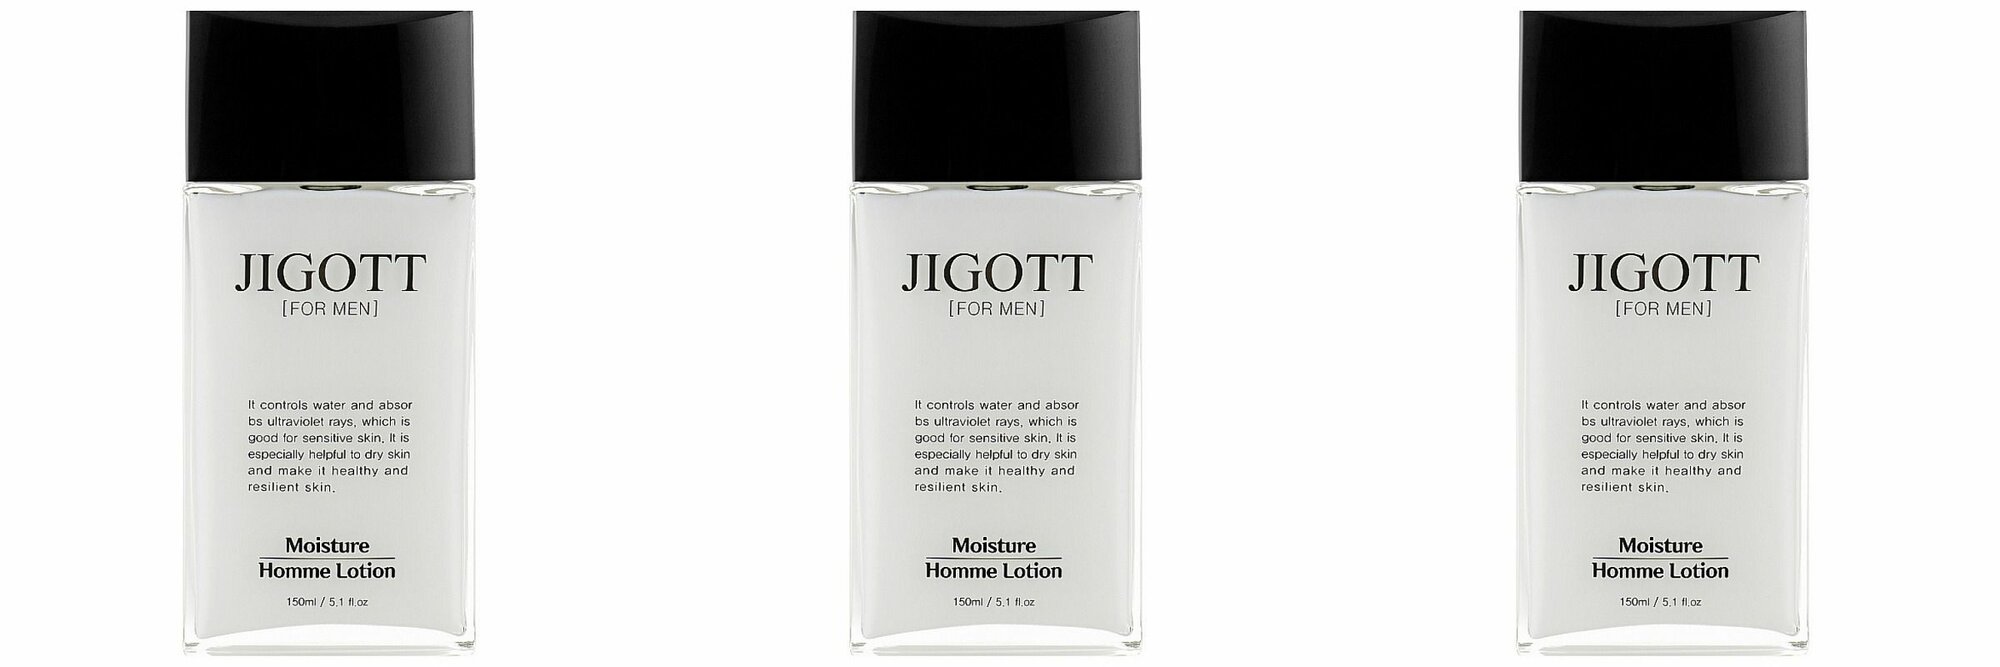 Jigott Лосьон для мужской кожи лица MOISTURE HOMME LOTION, 150 мл, 3 шт